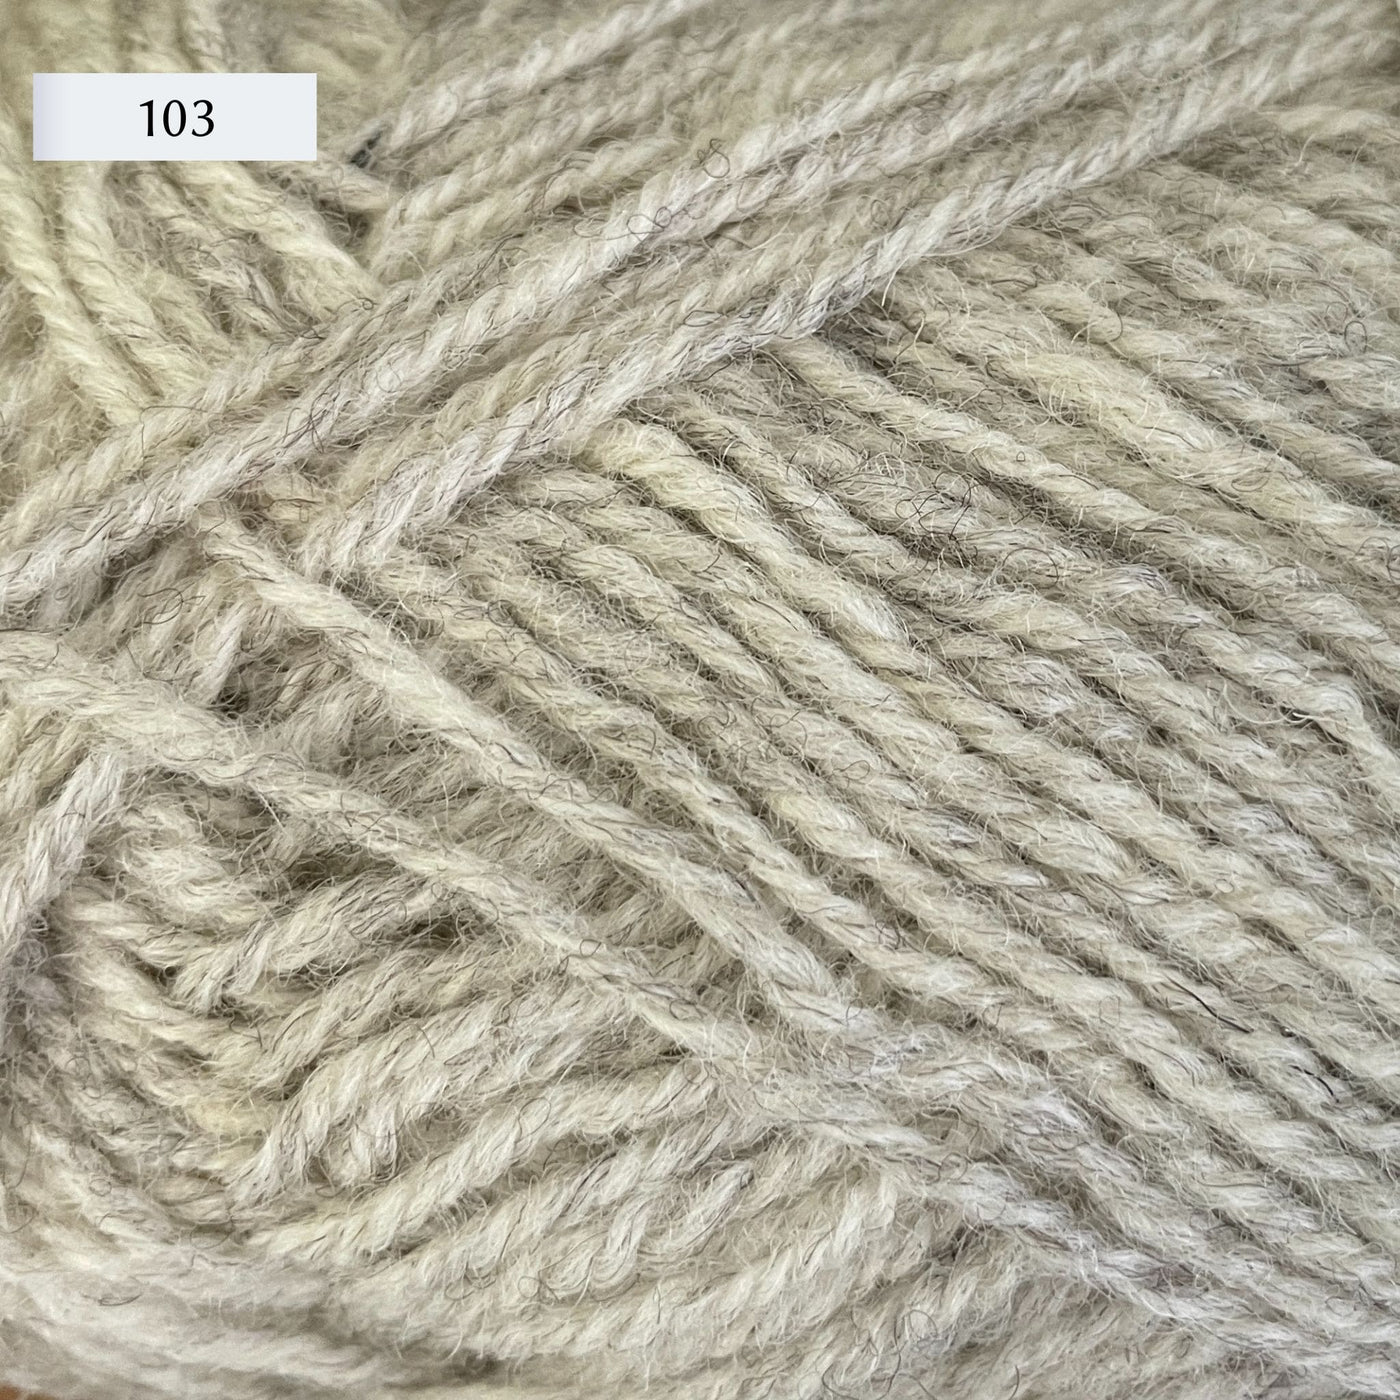 Rauma Strikkegarn, DK weight yarn, in color 103, a very light heathered grey